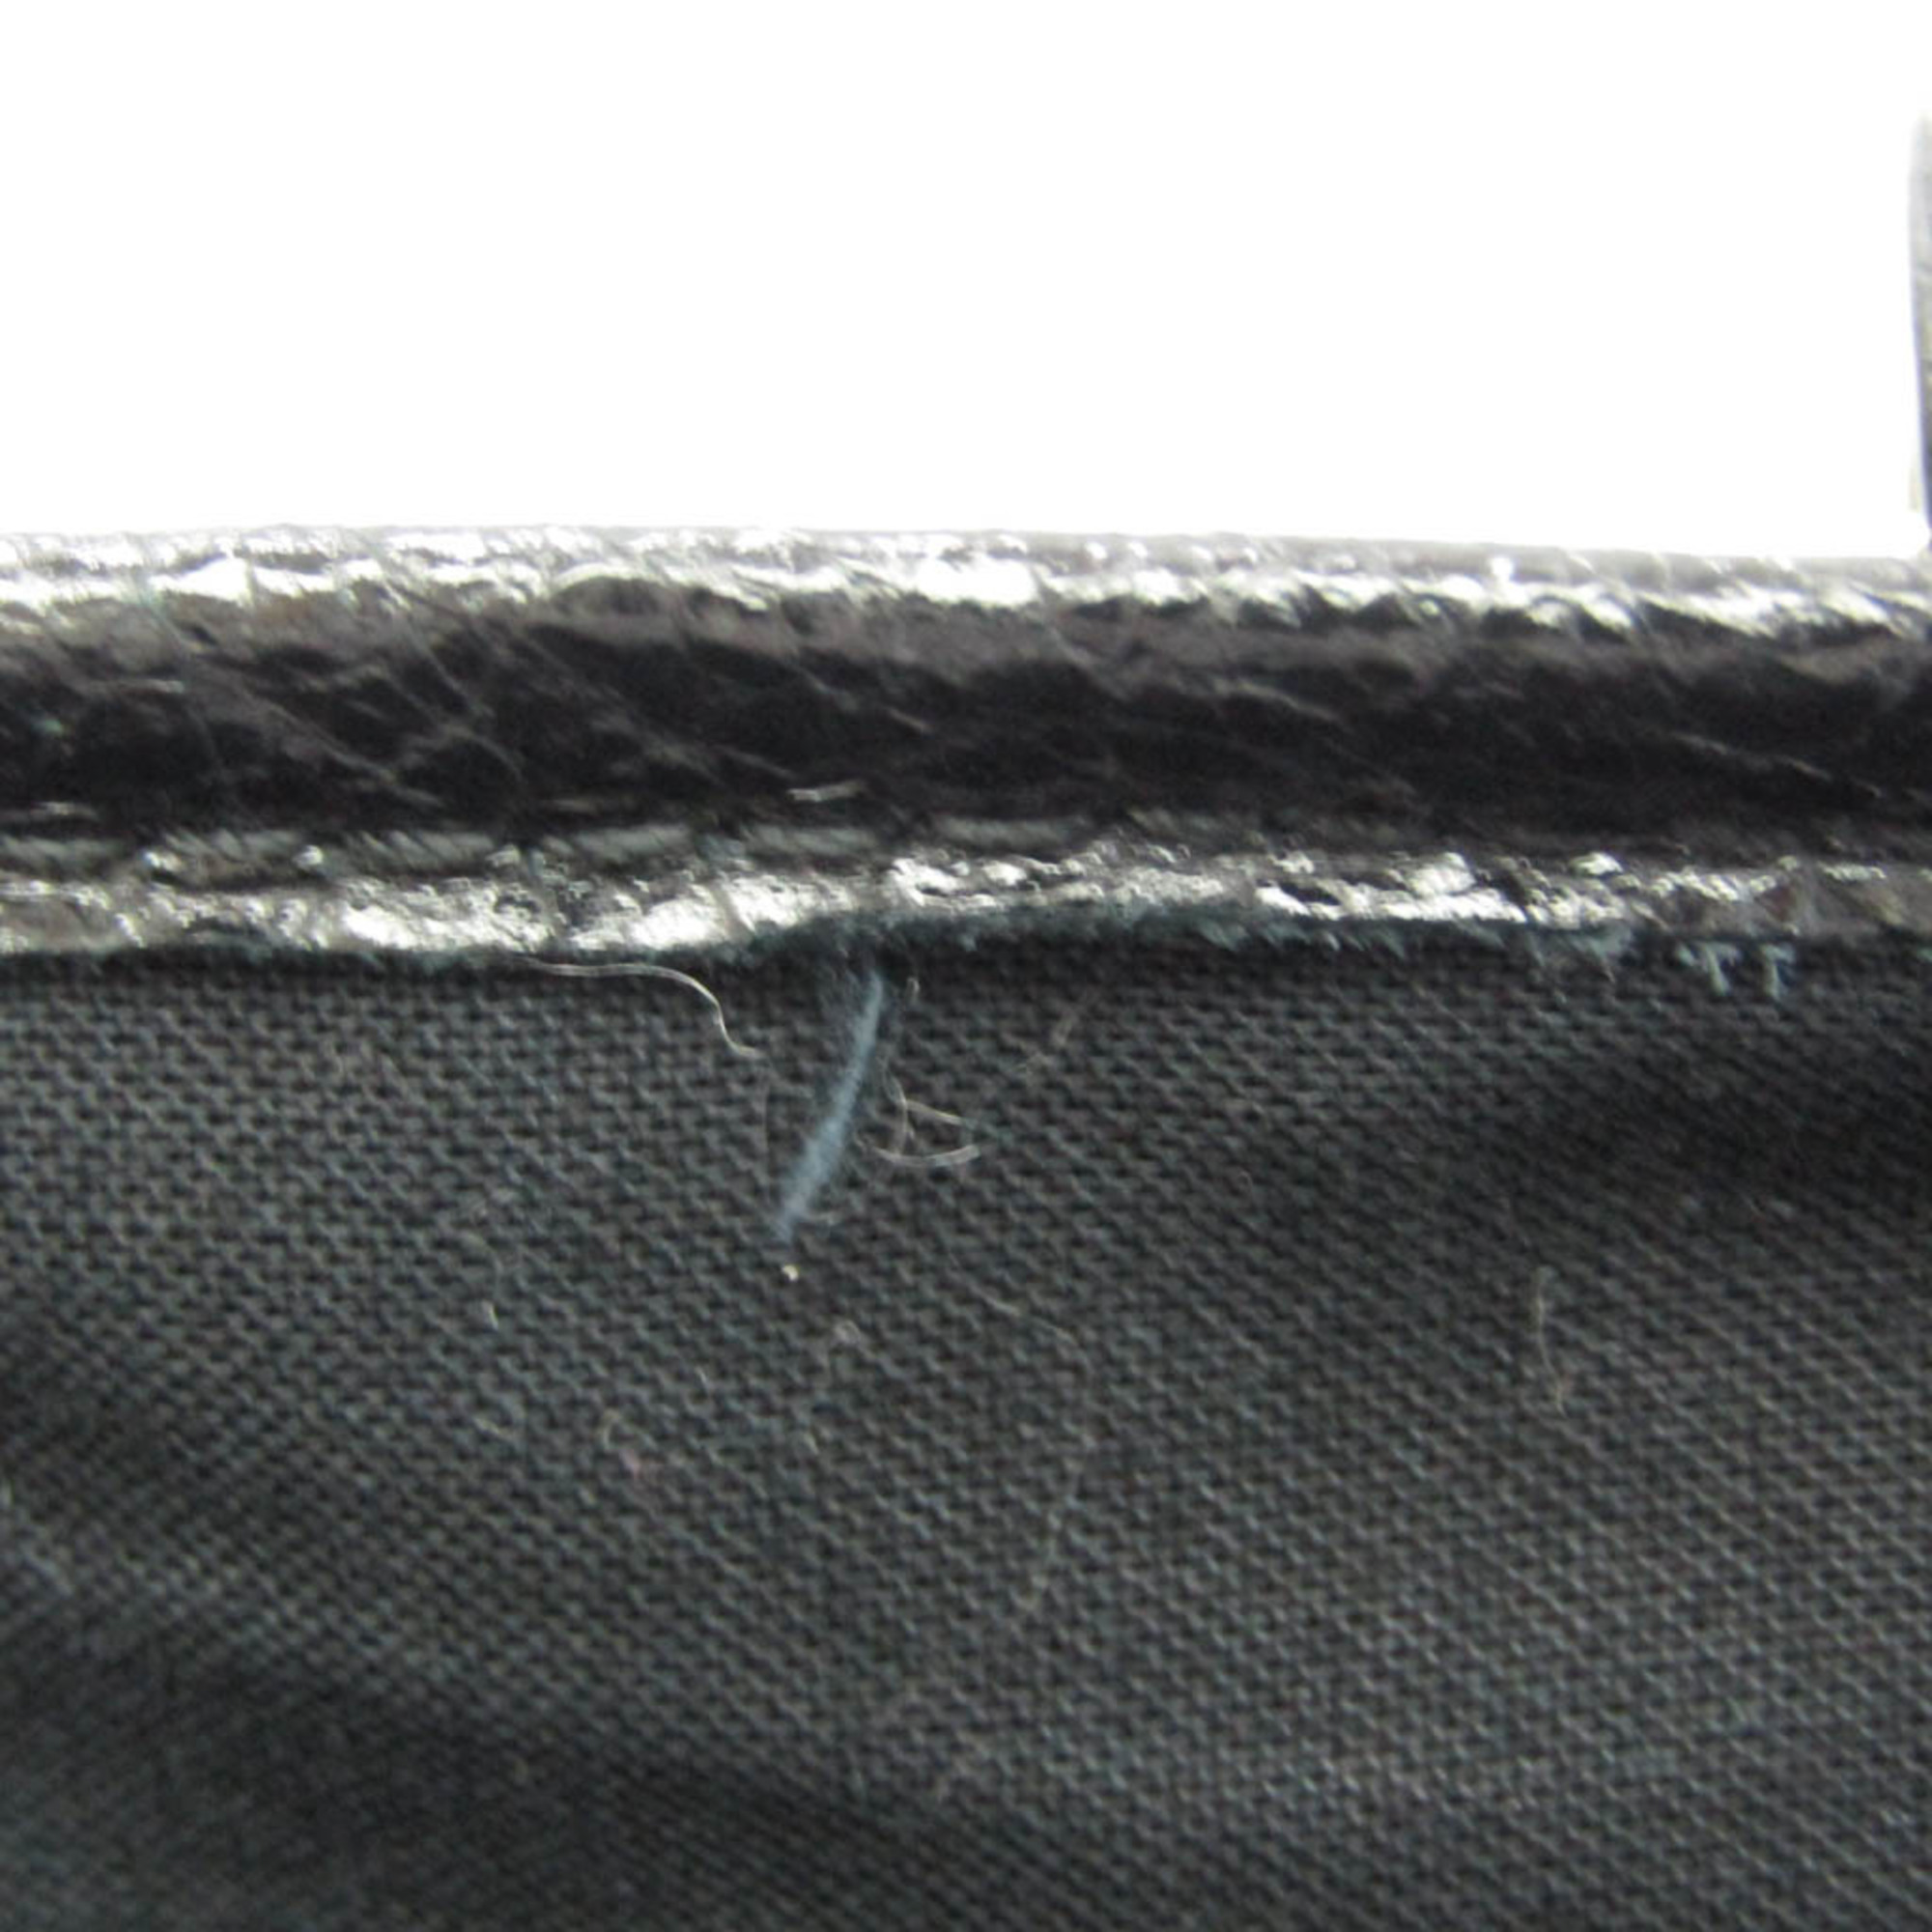 Balenciaga Navy Cabas XS 542018 Women's Leather Handbag,Shoulder Bag Black